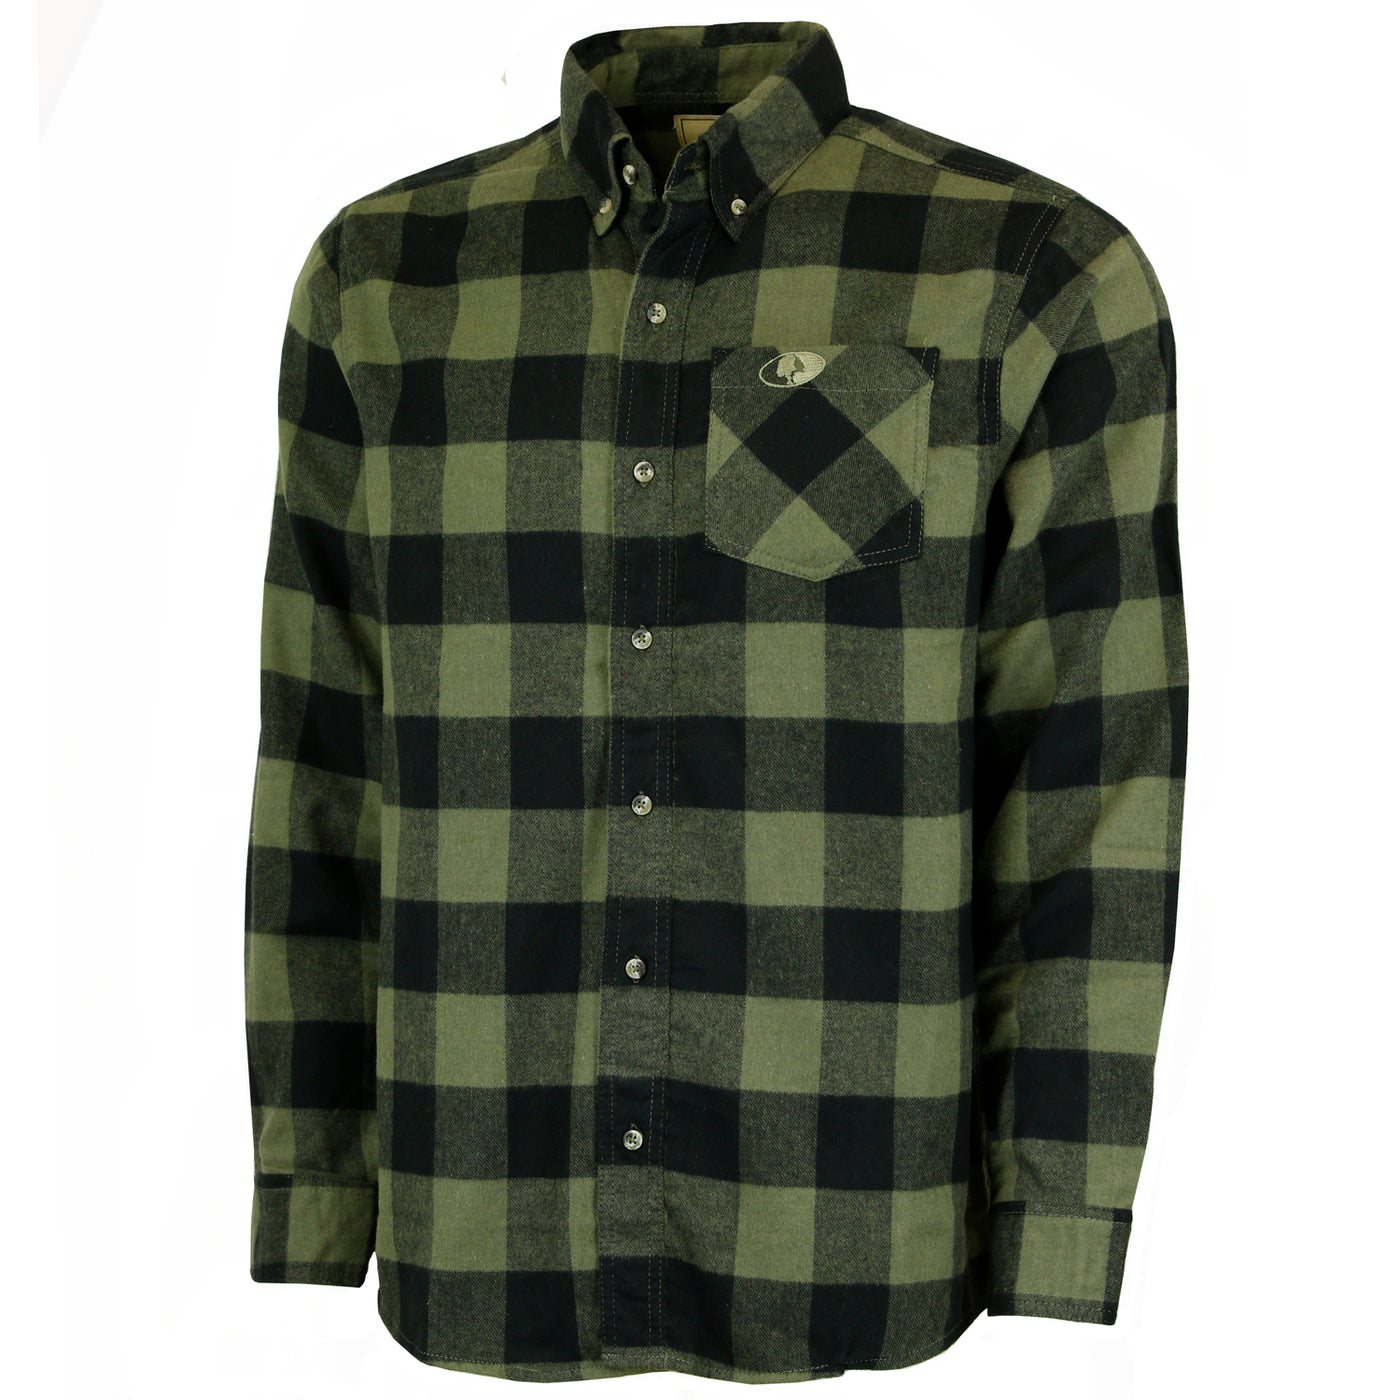 Mossy Oak Men's Thermal Lined Plaid Flannel Shirt – The Mossy Oak